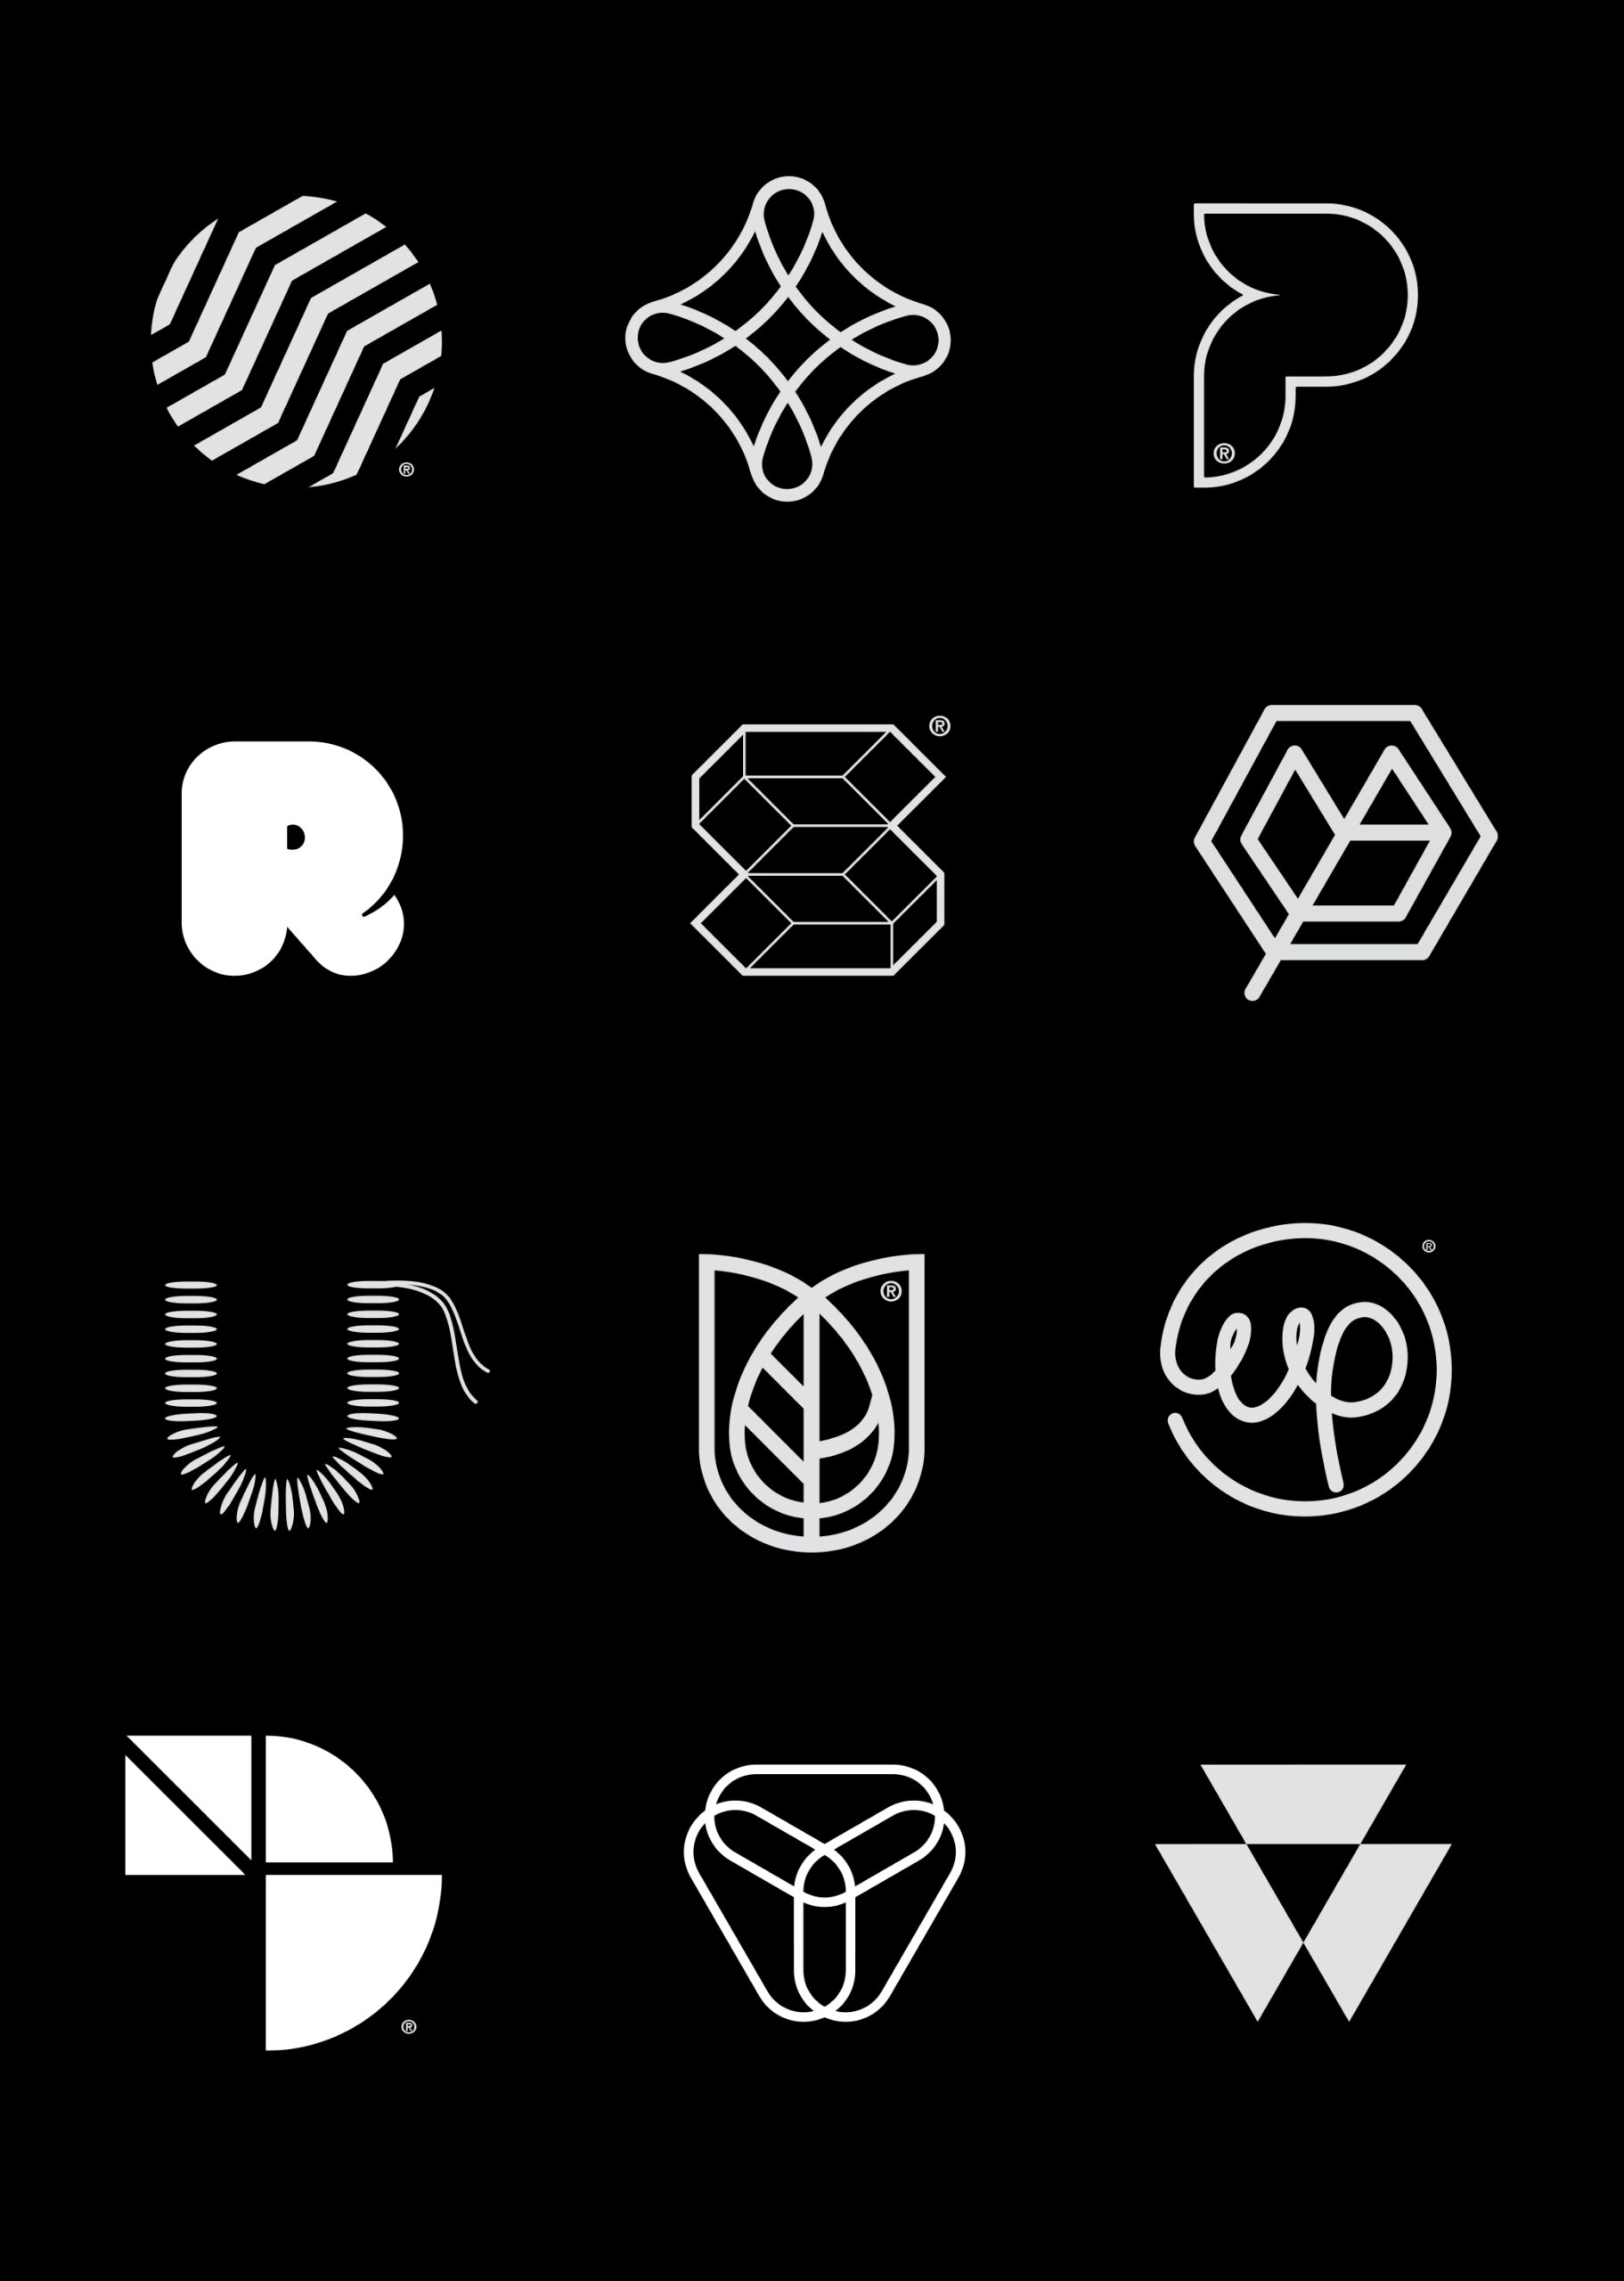 Twelve different geometric logo designs, white on a black background